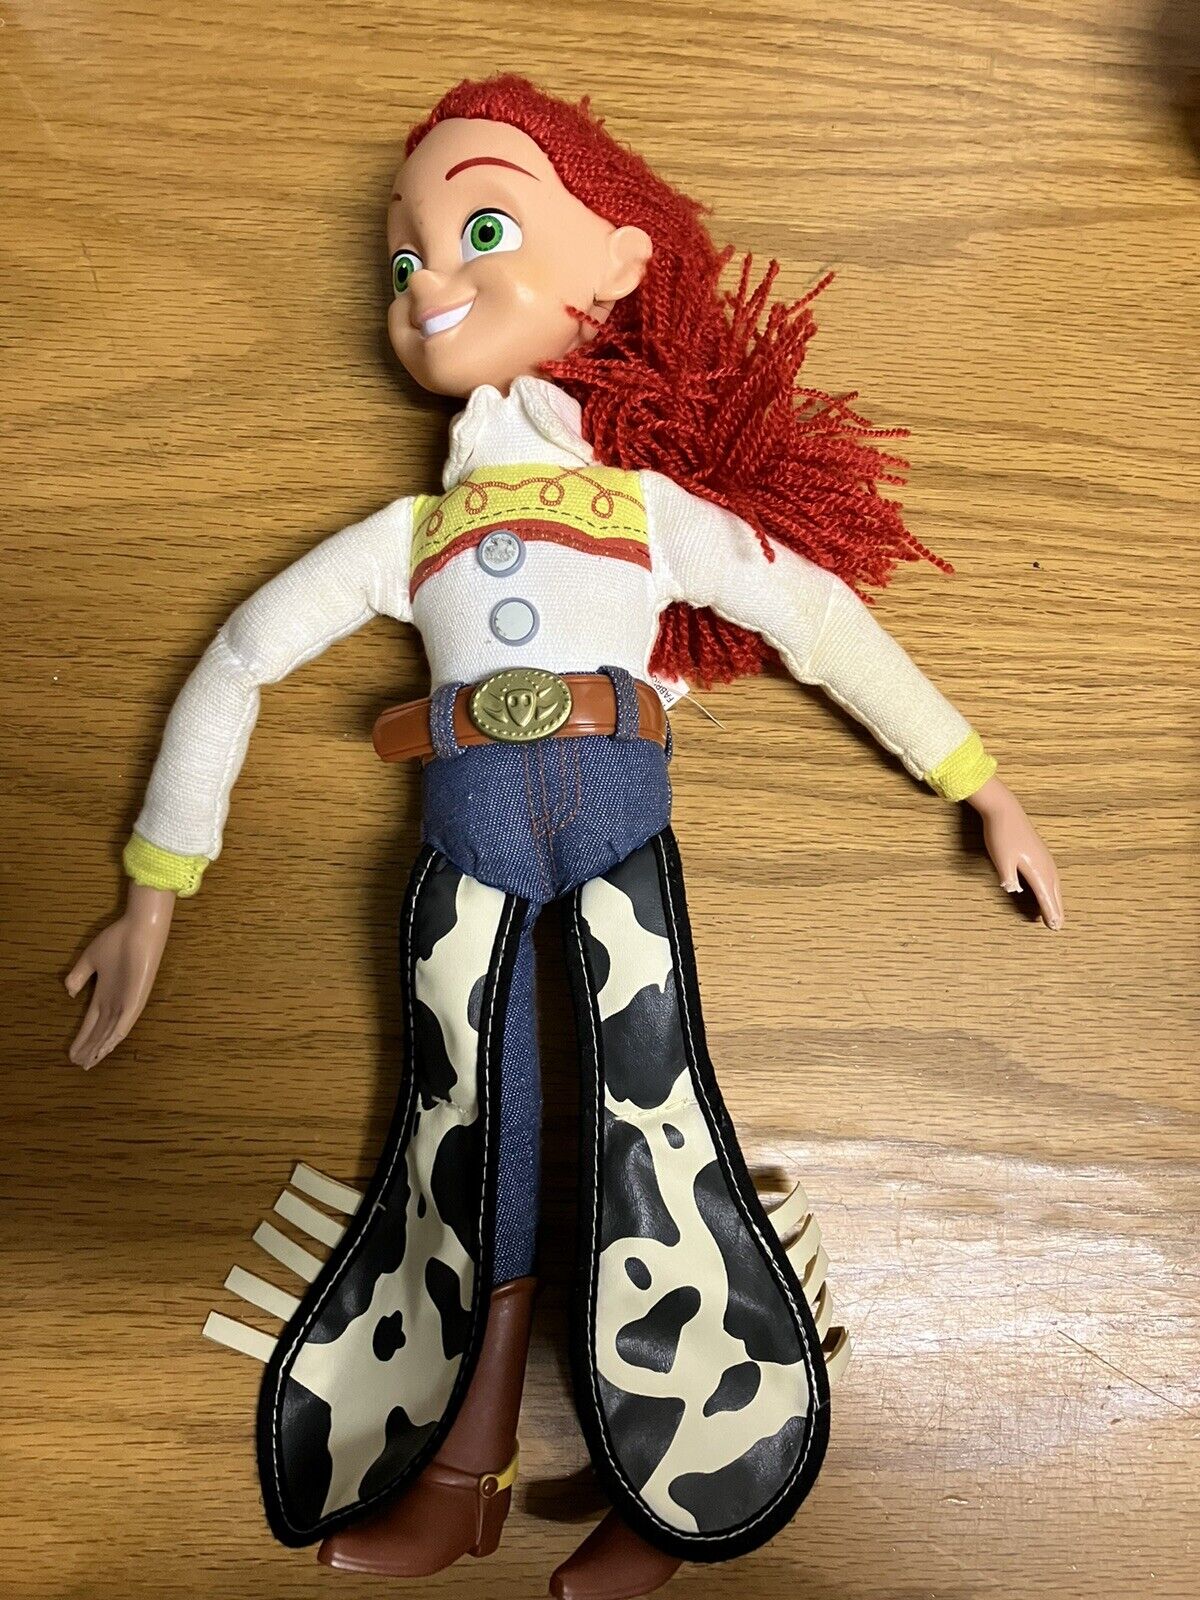 Disney Pixar Toy Story Pull String Talking Jessie Yarn Hair - Tested & Working